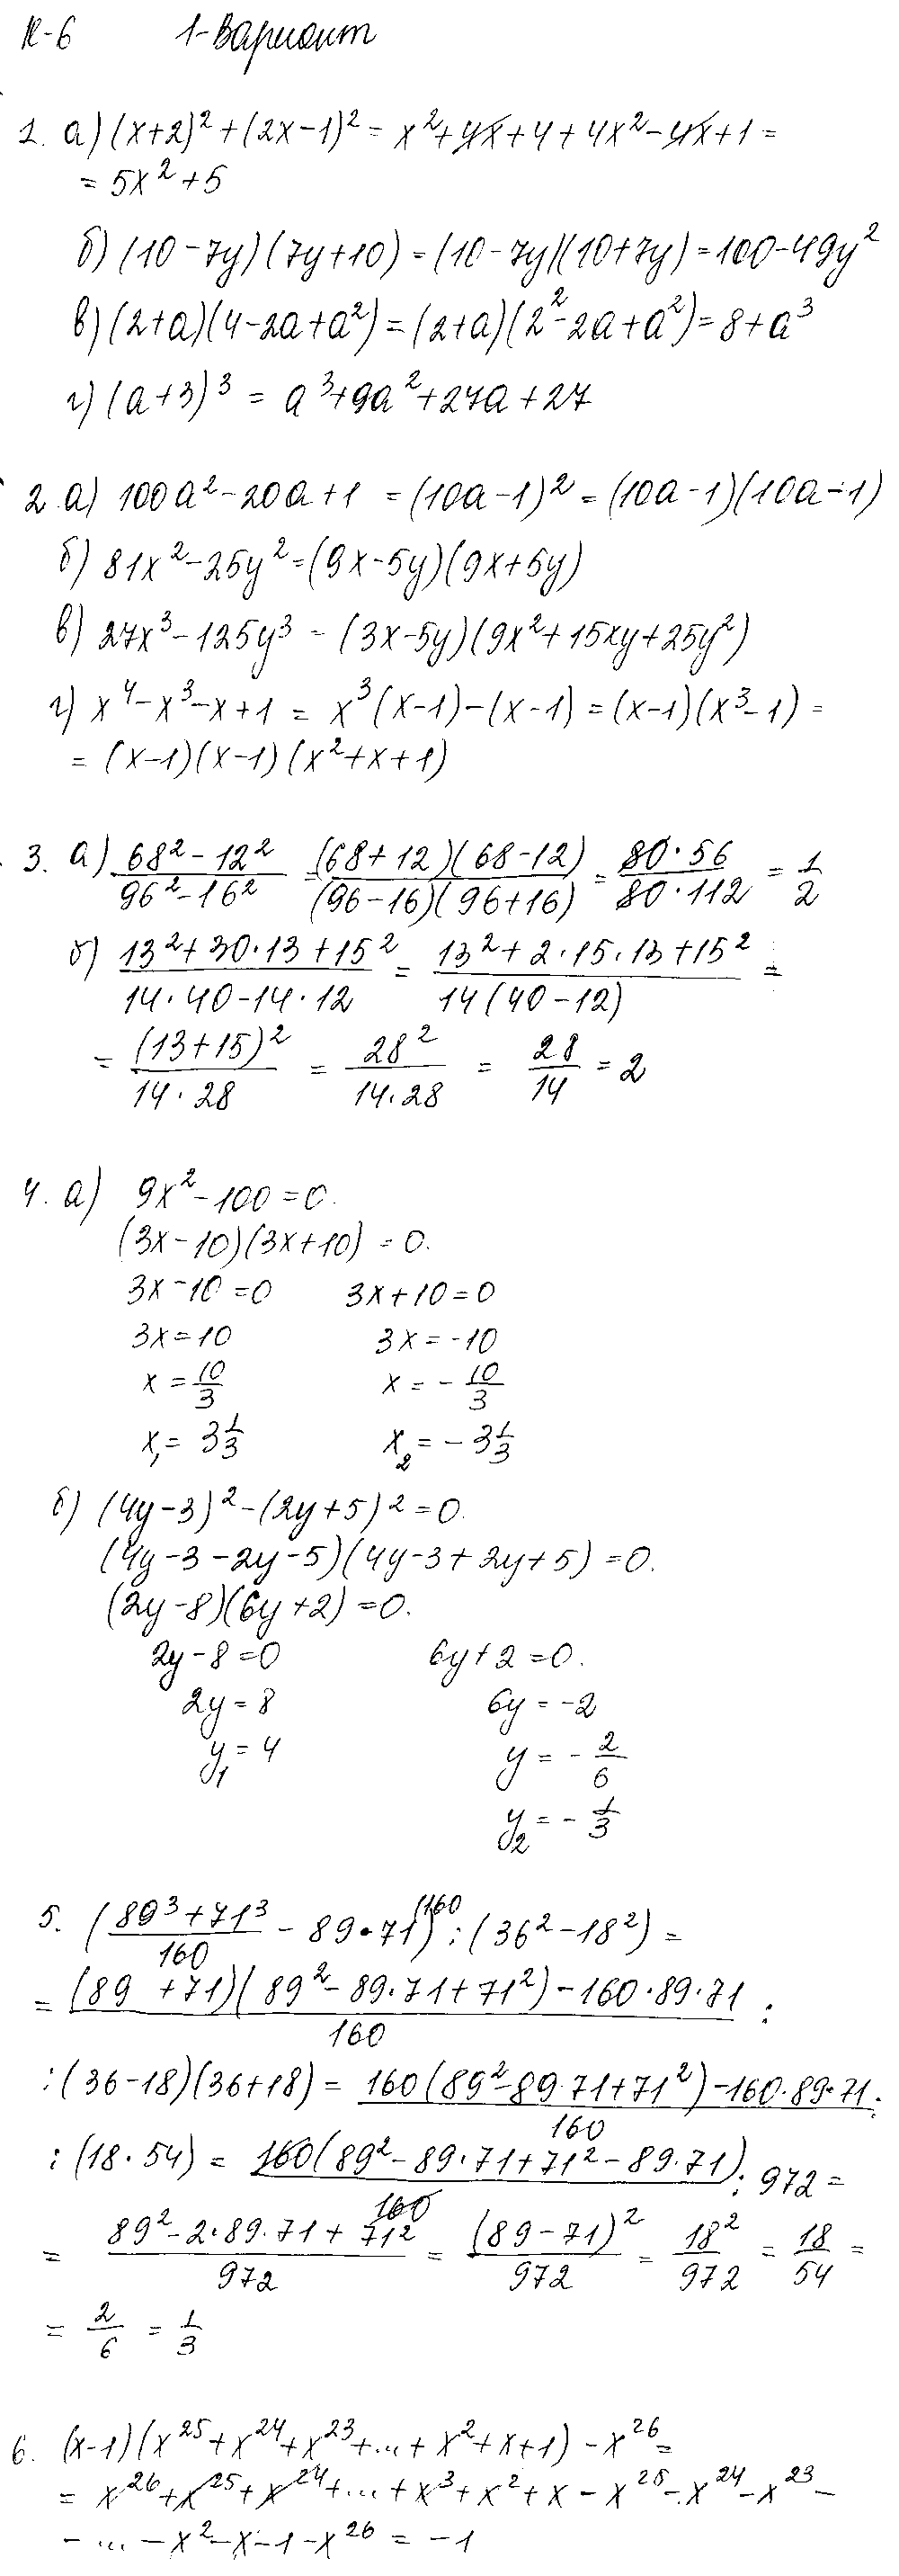 ГДЗ Алгебра 7 класс - Вариант 1